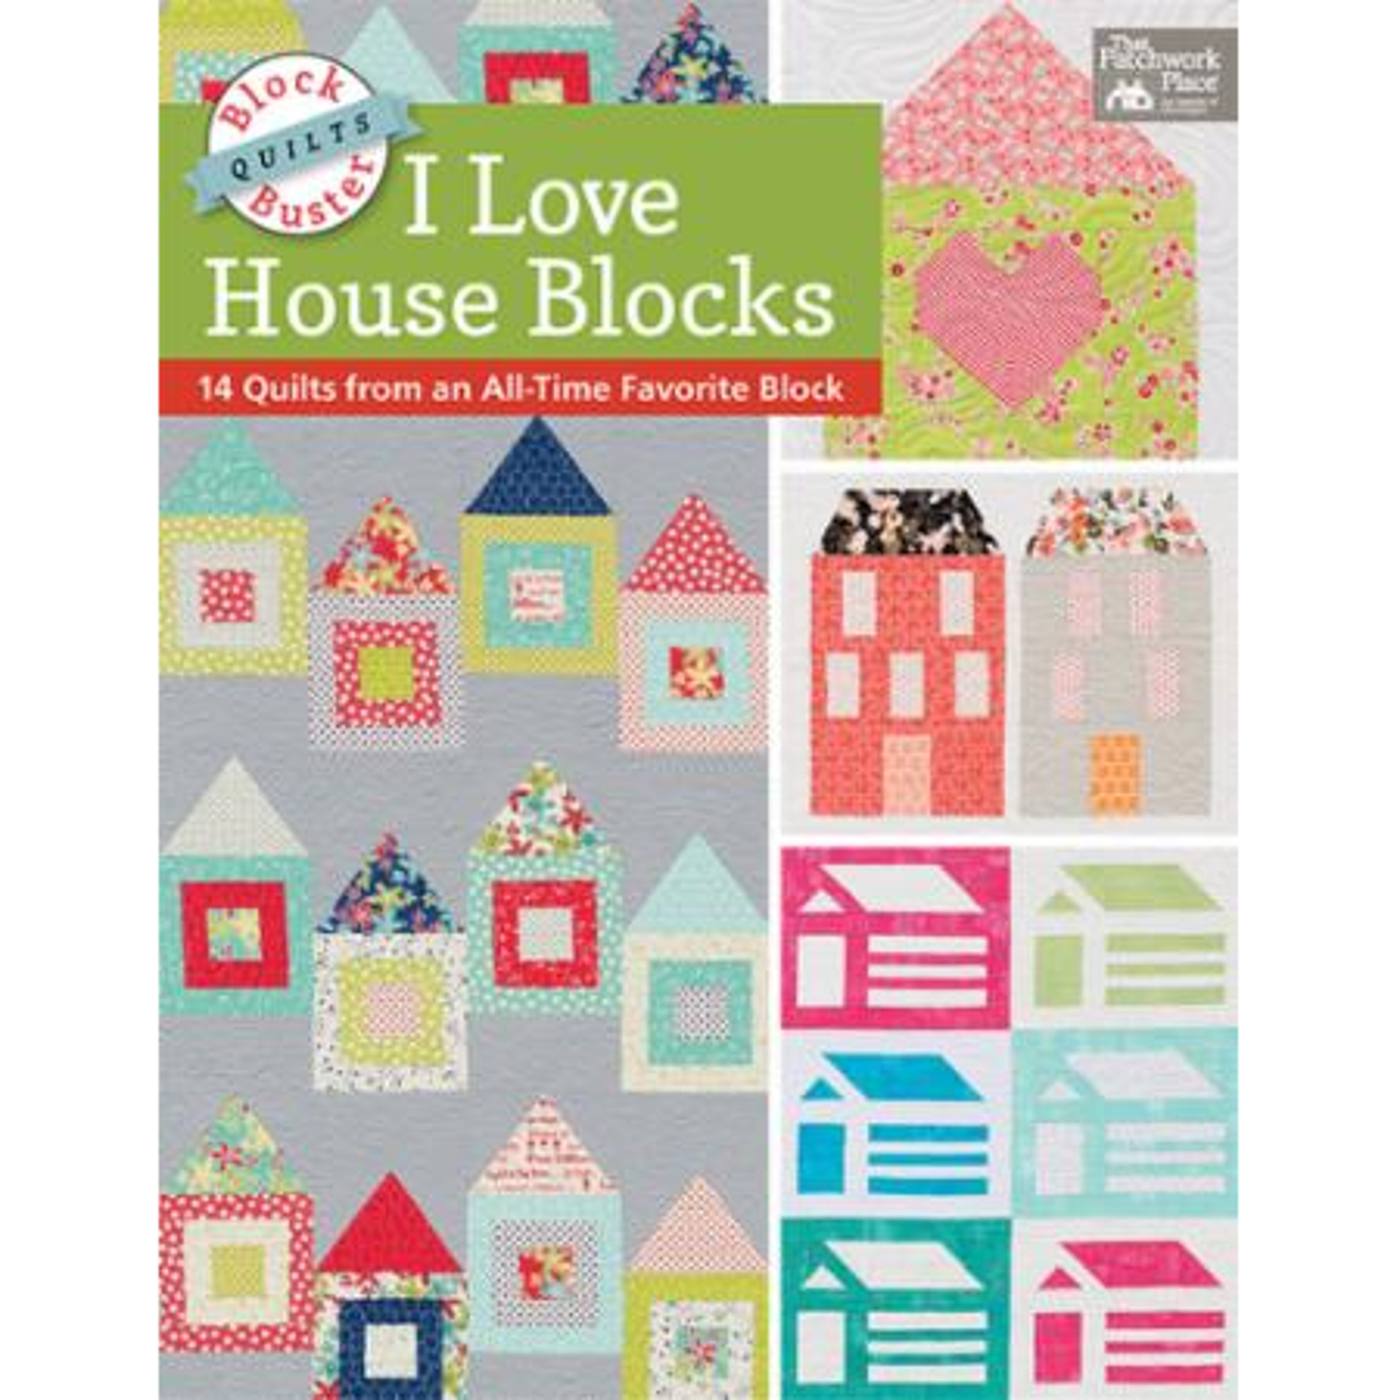 I love house blocks